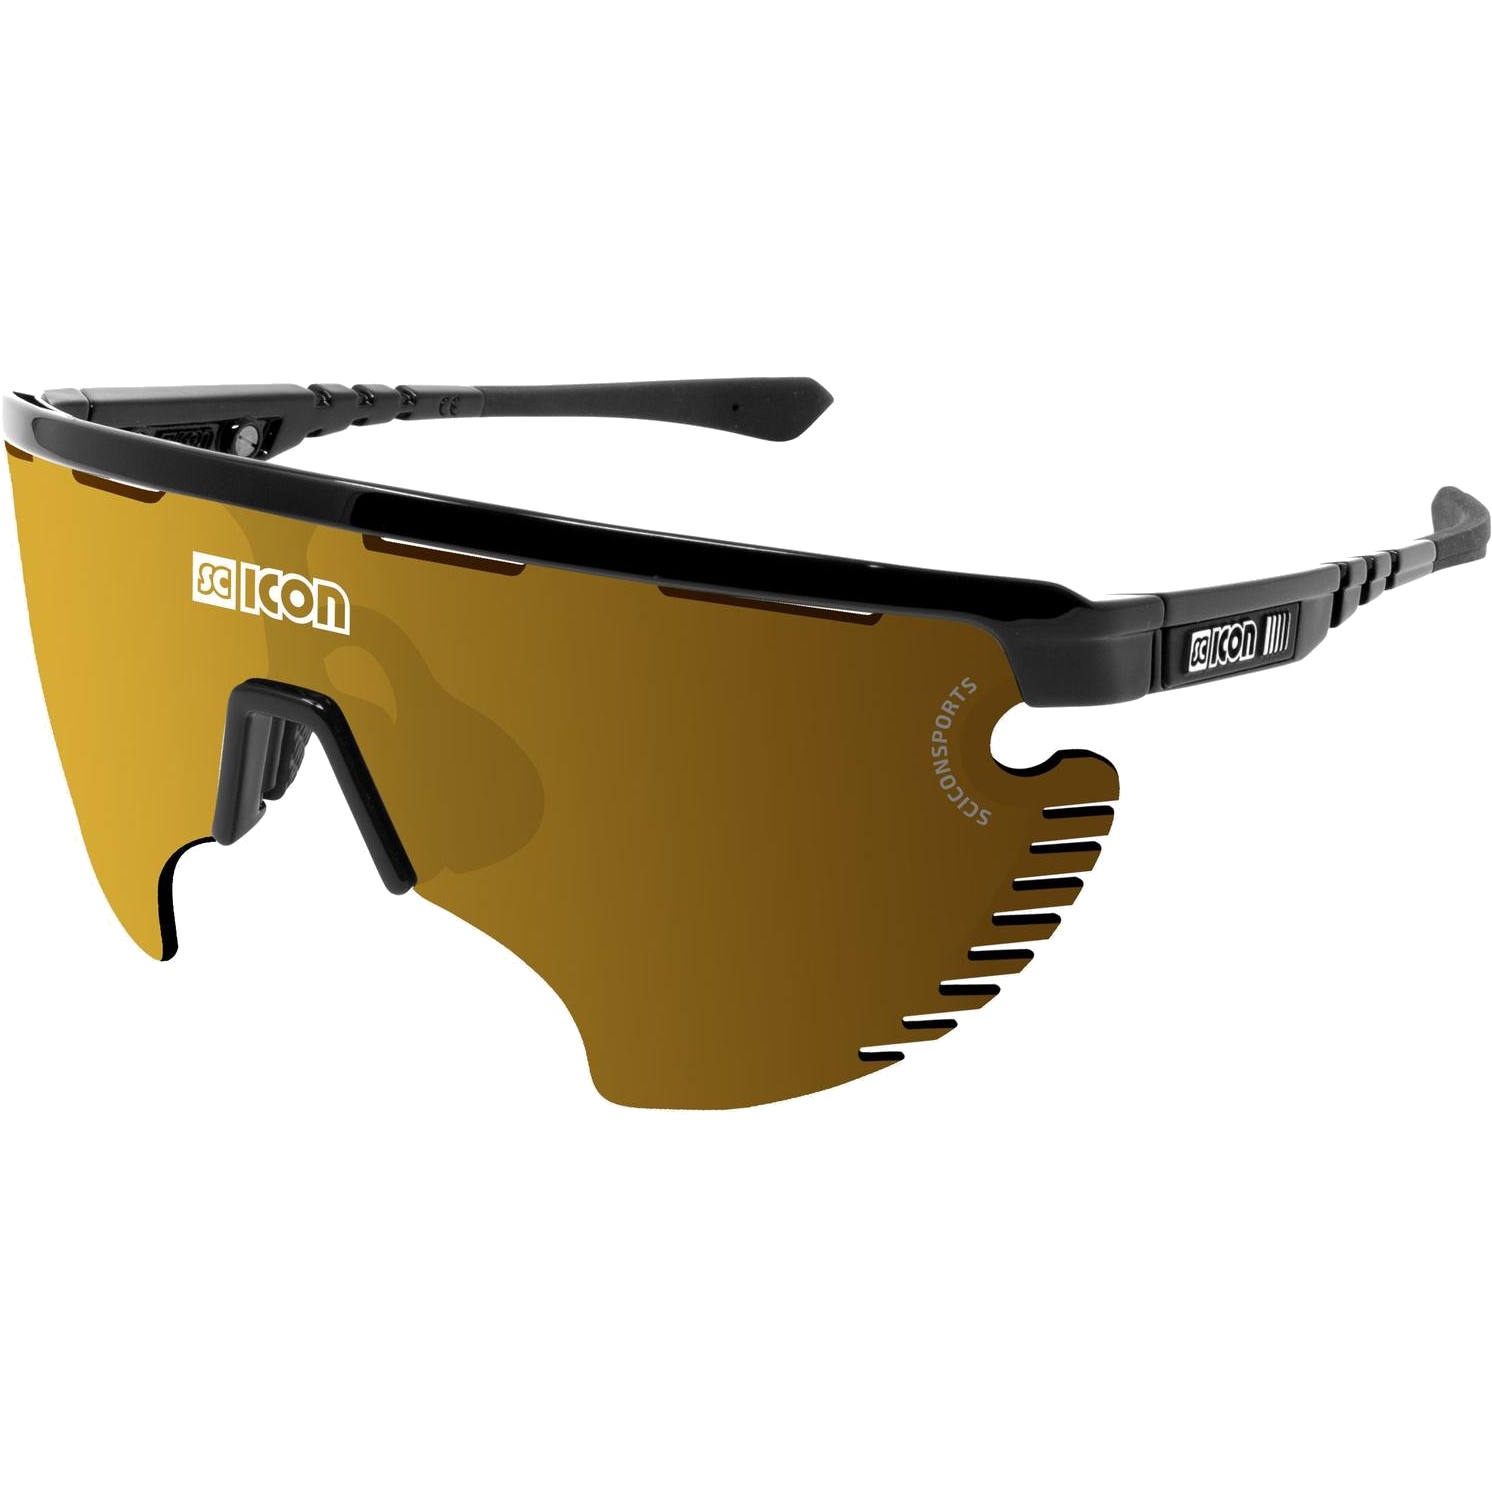 Productfoto van Scicon Aerowing Lamon Sport Glasses - Black Gloss / SCNPP Multimirror Bronze + Clear